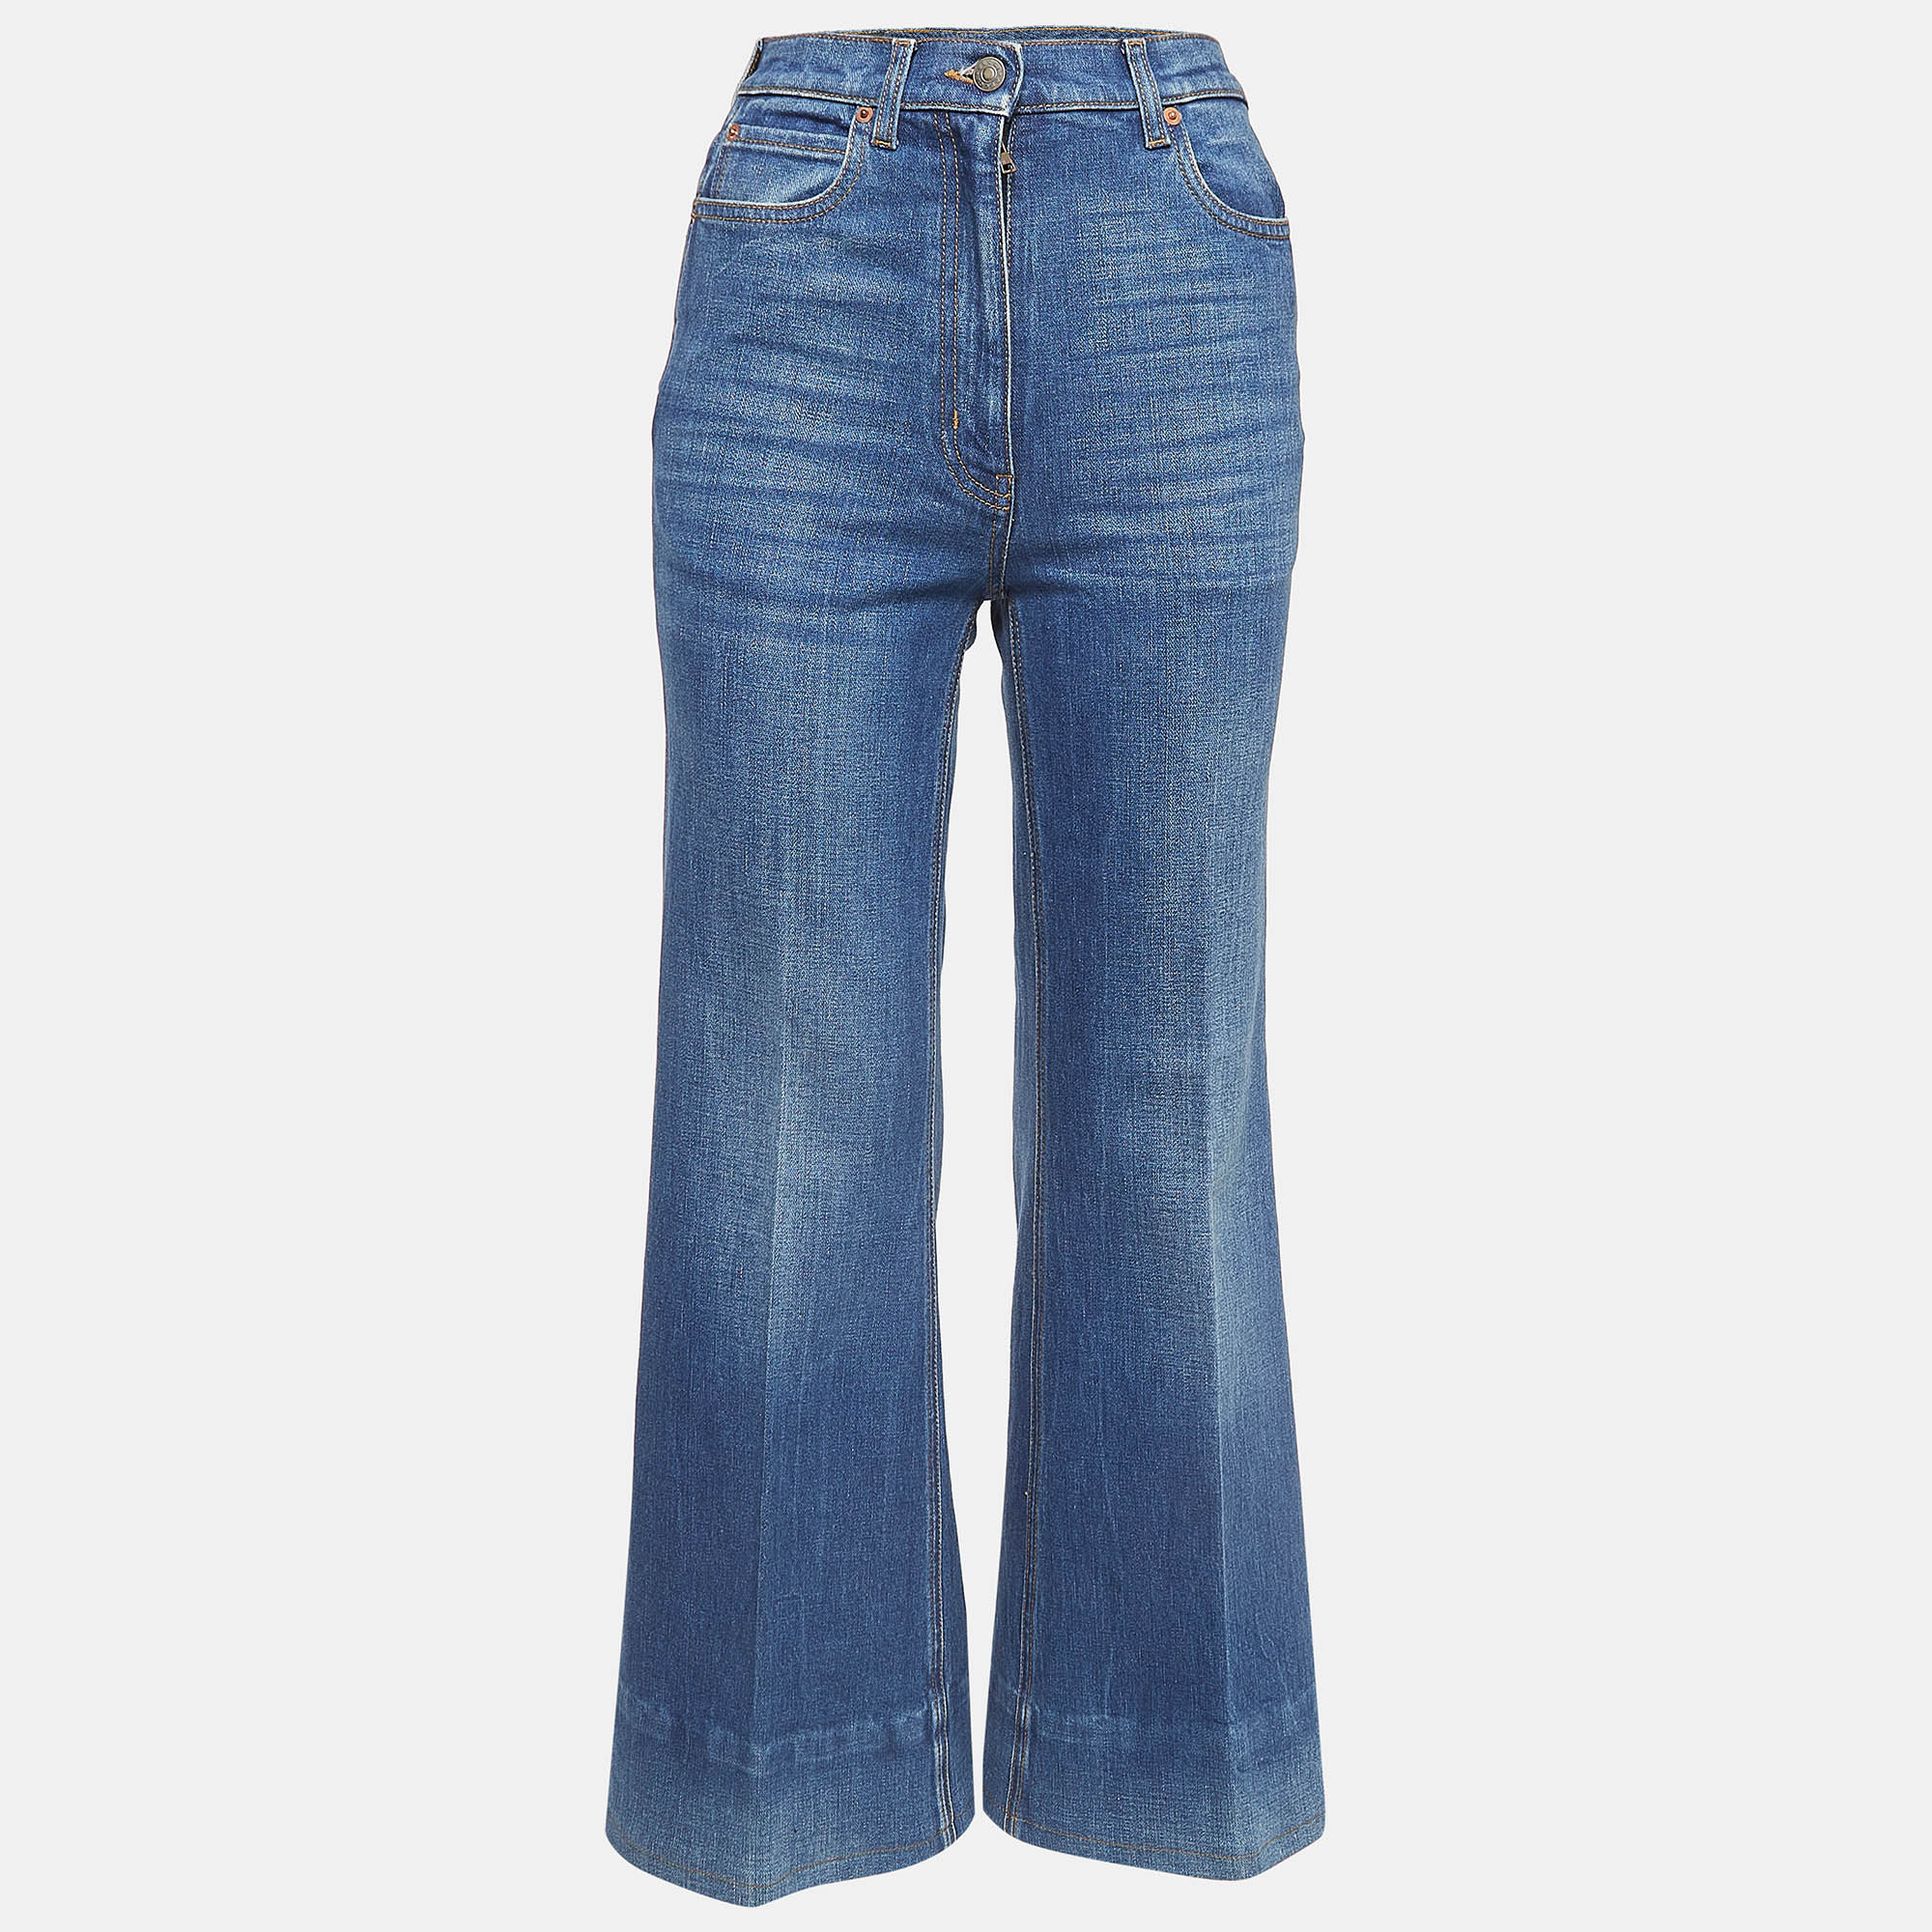 

Gucci Blue Faded Denim High Rise Flared Jeans S Waist 23''